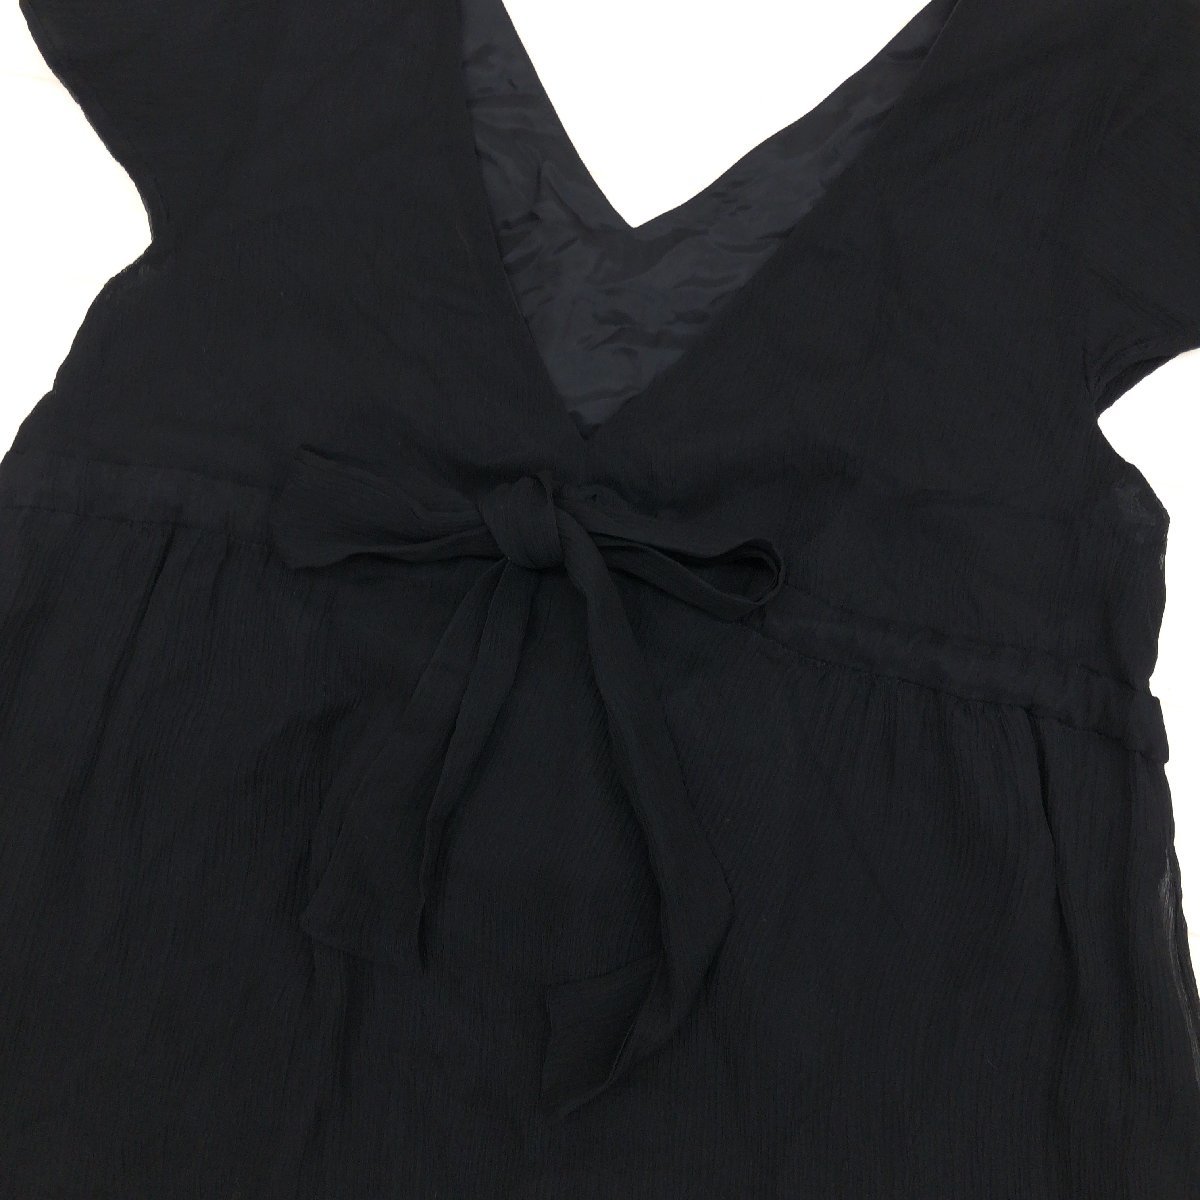 Spick&Span スピック&スパン シルク100% ドレス ワンピース M相当 黒 ブラック シアーワンピース 日本製 国内正規品 レディース 女性用_画像5